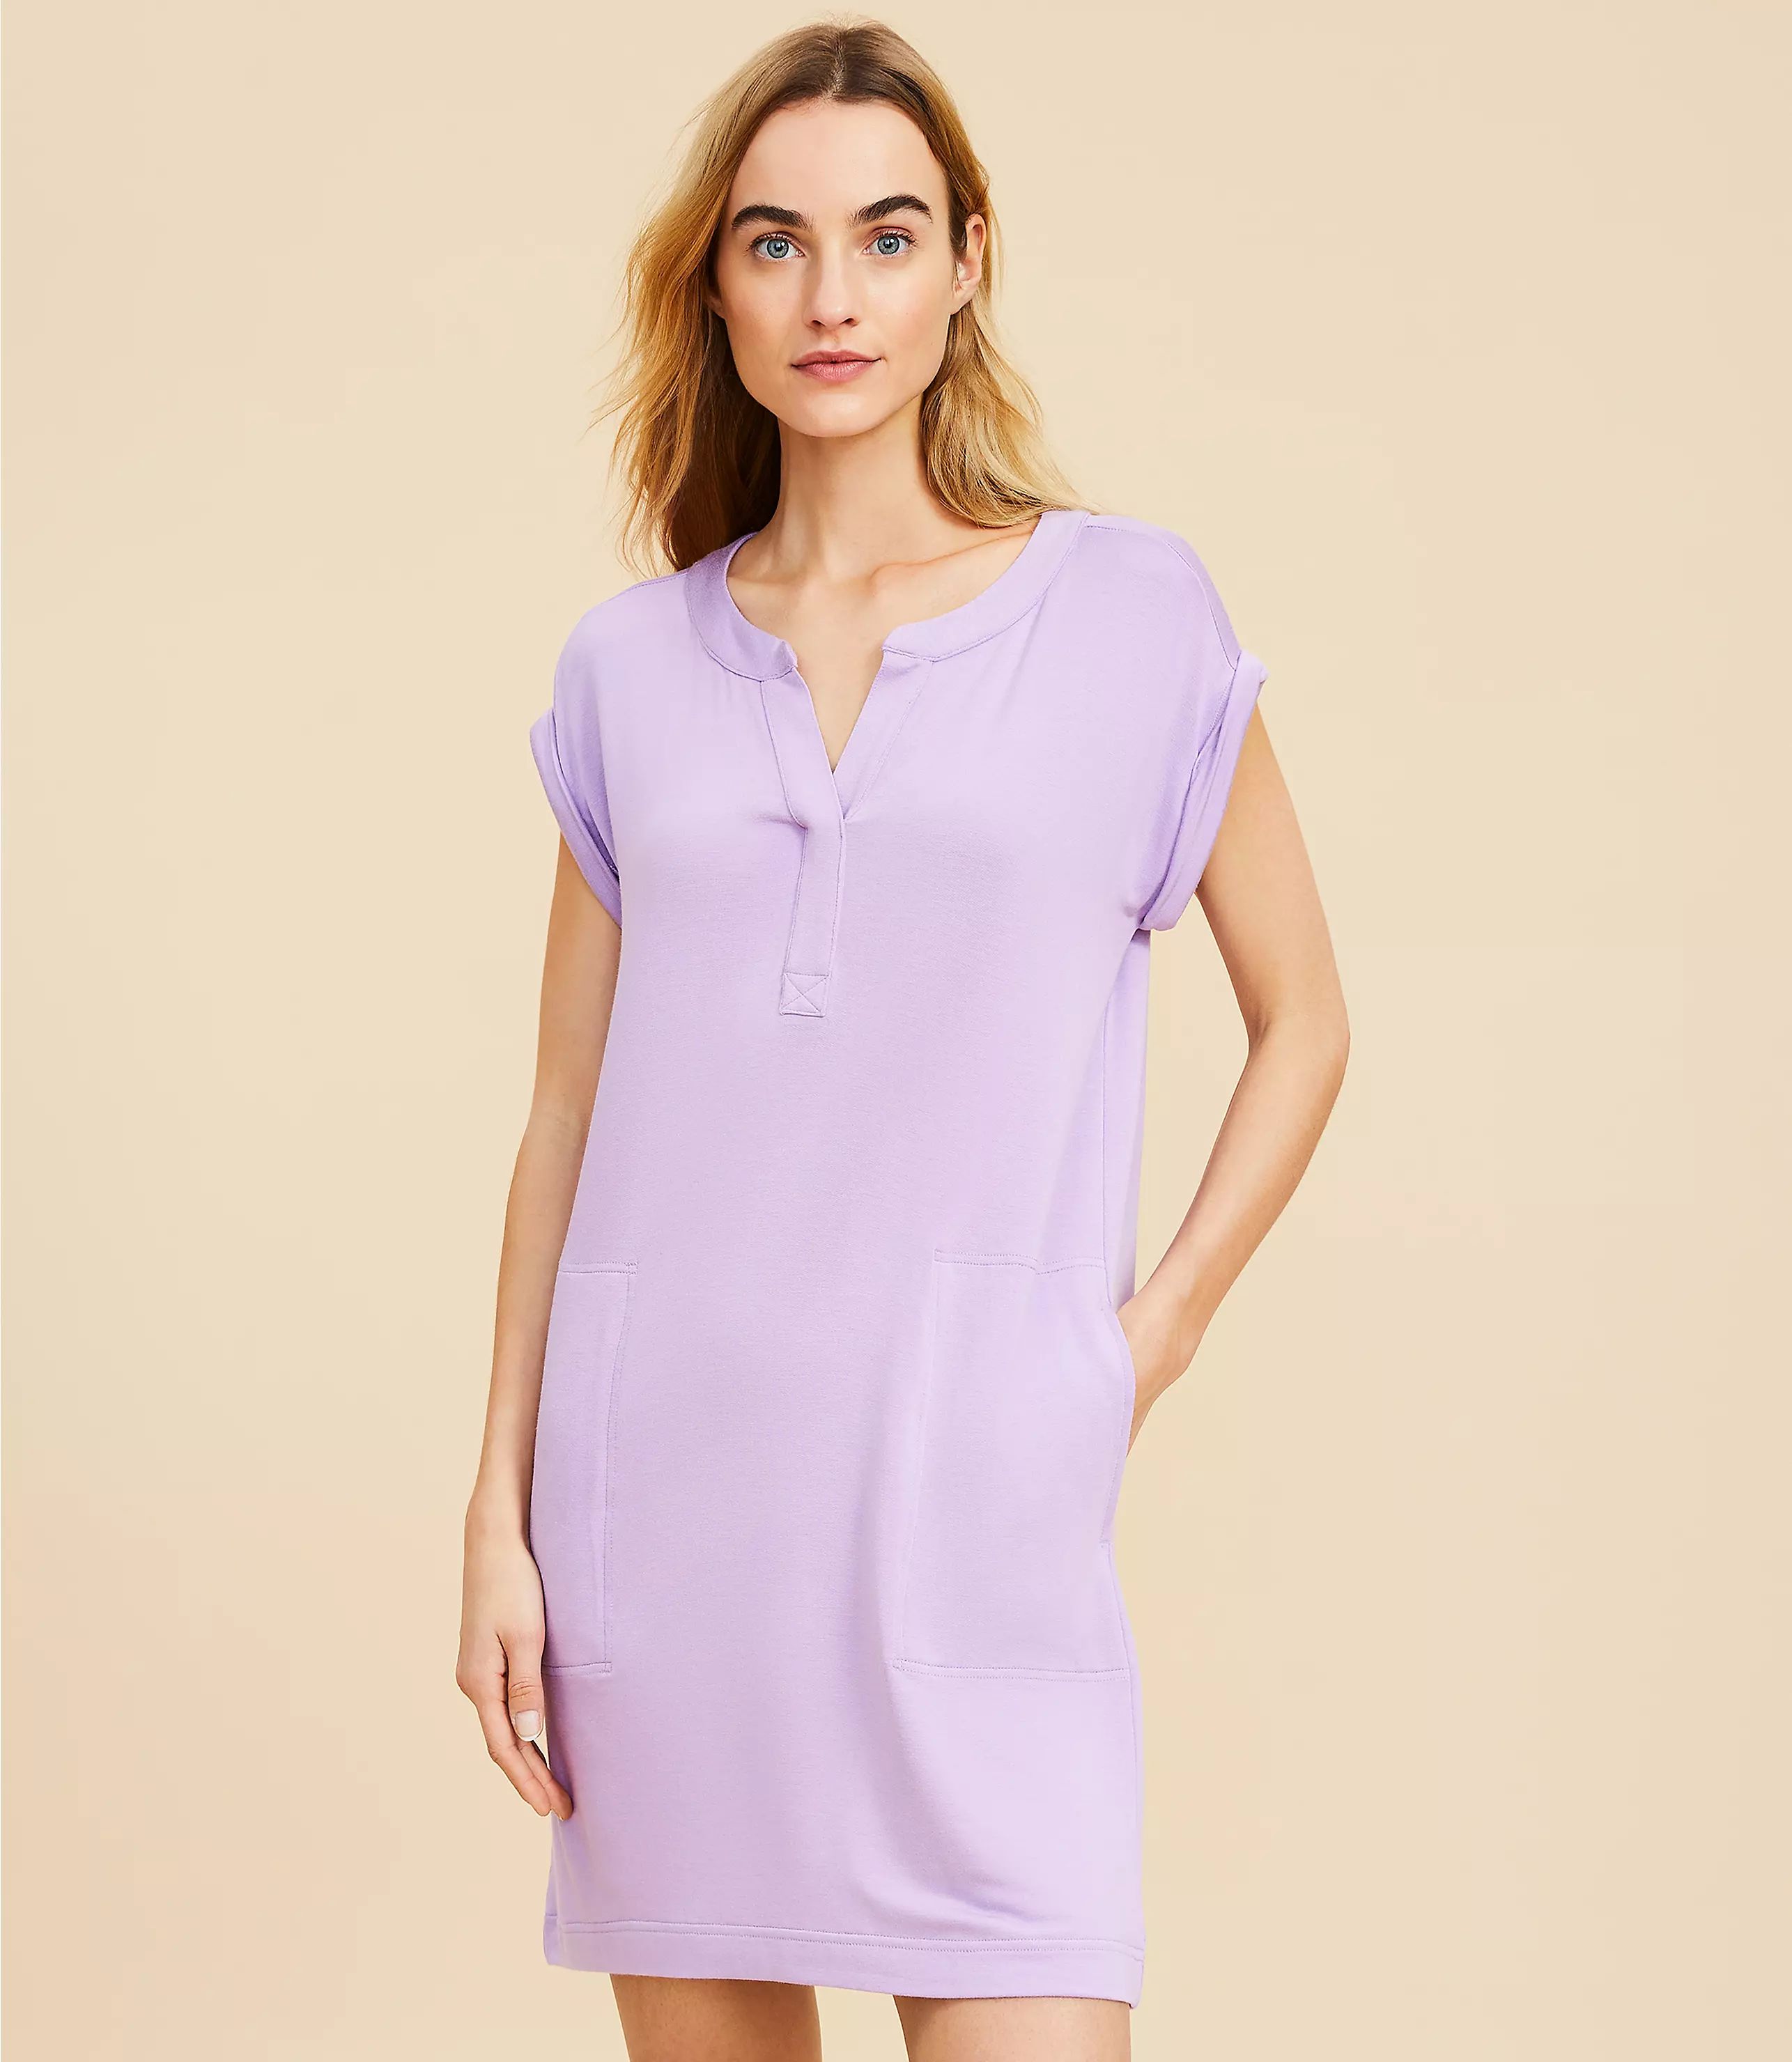 Lou & Grey Signaturesoft Henley Pocket Dress | LOFT